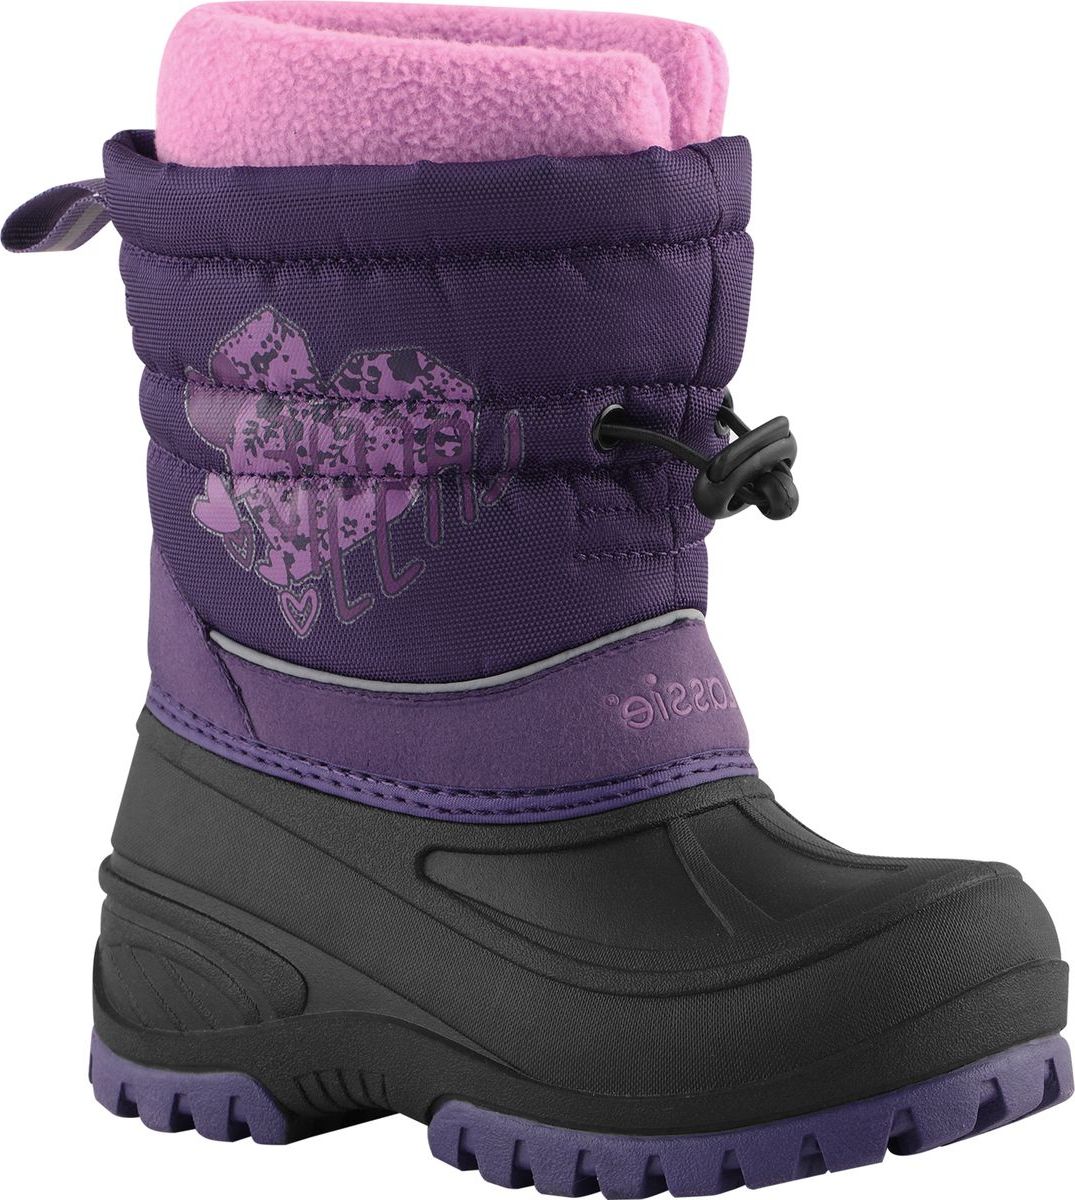 Ботинки детские Lassie Coldwell, цвет: пурпурный. 7691215950. Размер 26